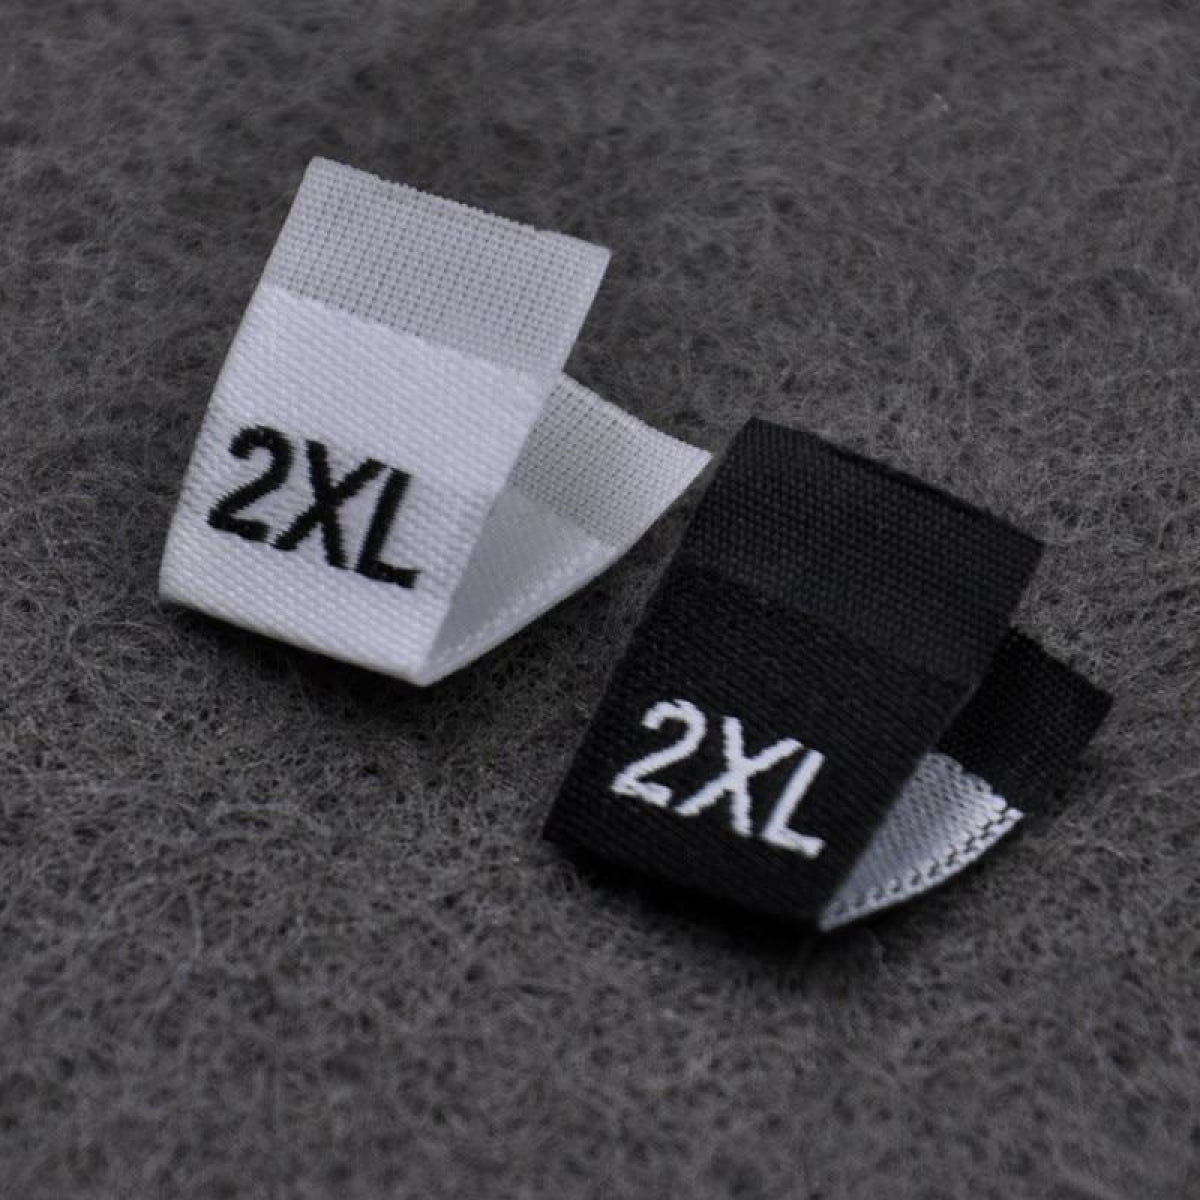 100pcs Clothing Size Label Tags XS S M L XL 2XL 3XL 4XL Black Text White Garment Clothes T Shirt Dress Fabric - 2XL Black - Asia Sell